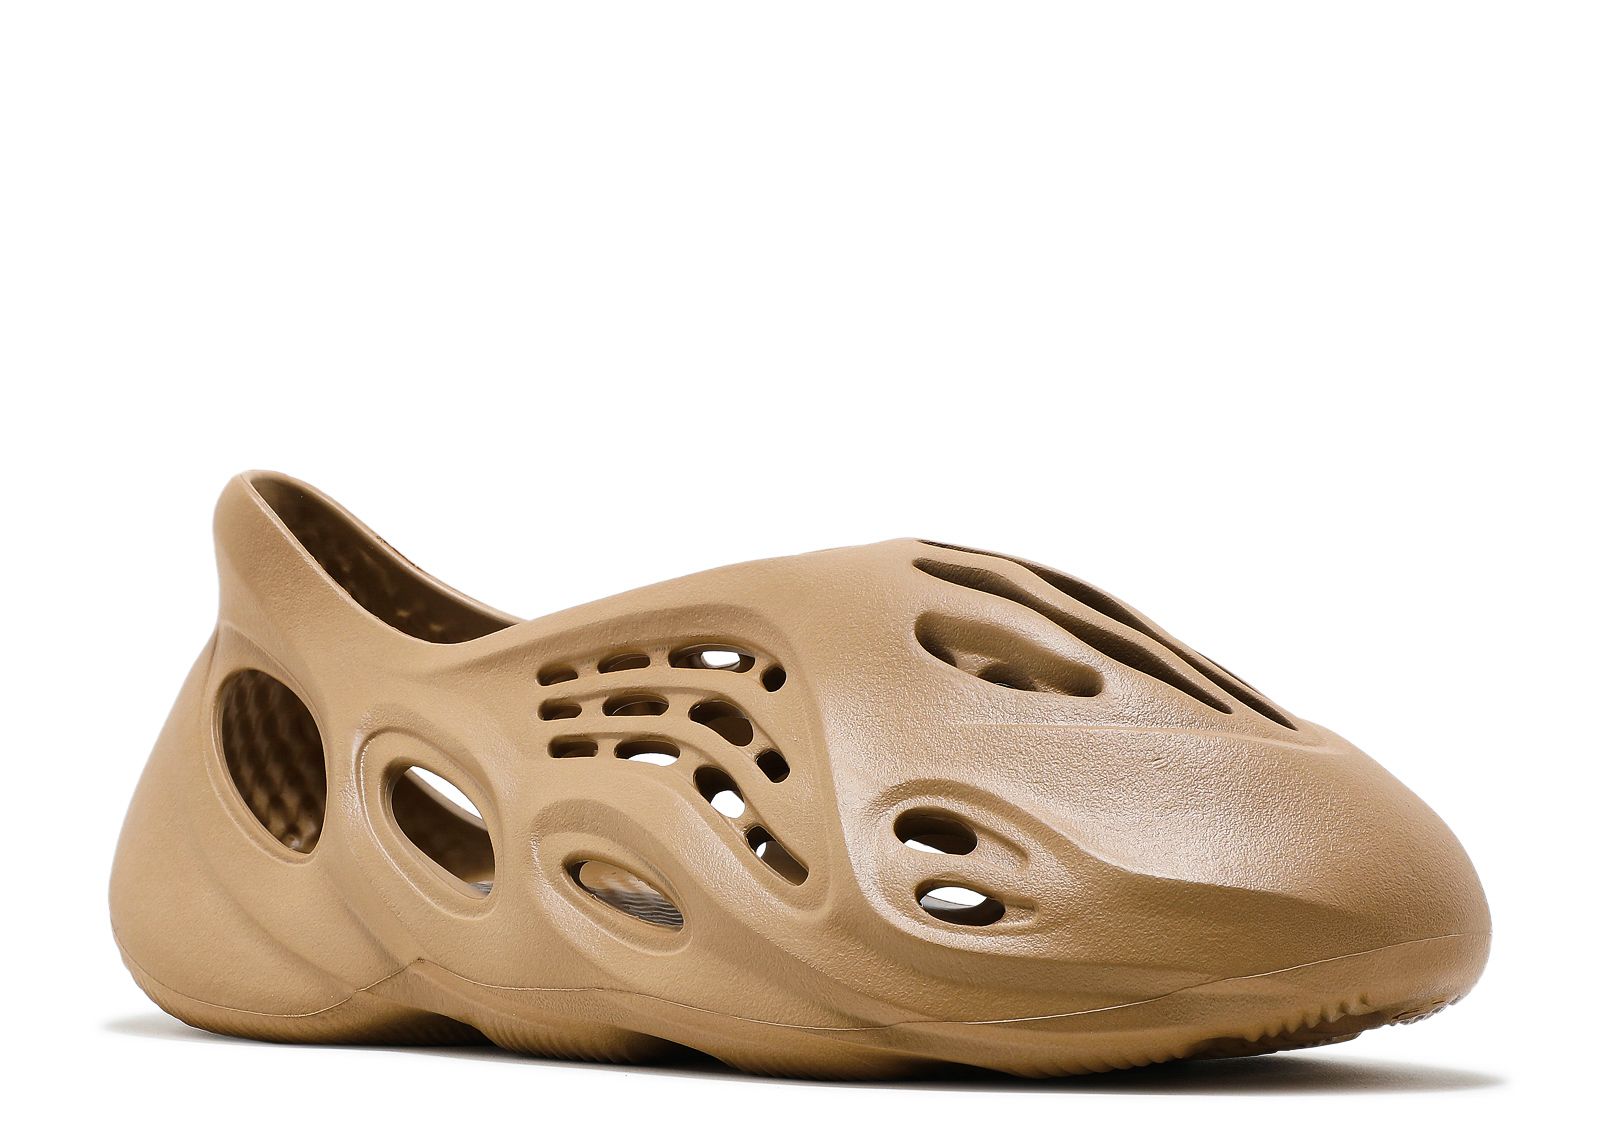 Yeezy Foam Runner 'Ochre' - Adidas - GW3354 - ochre/ochre/ochre 